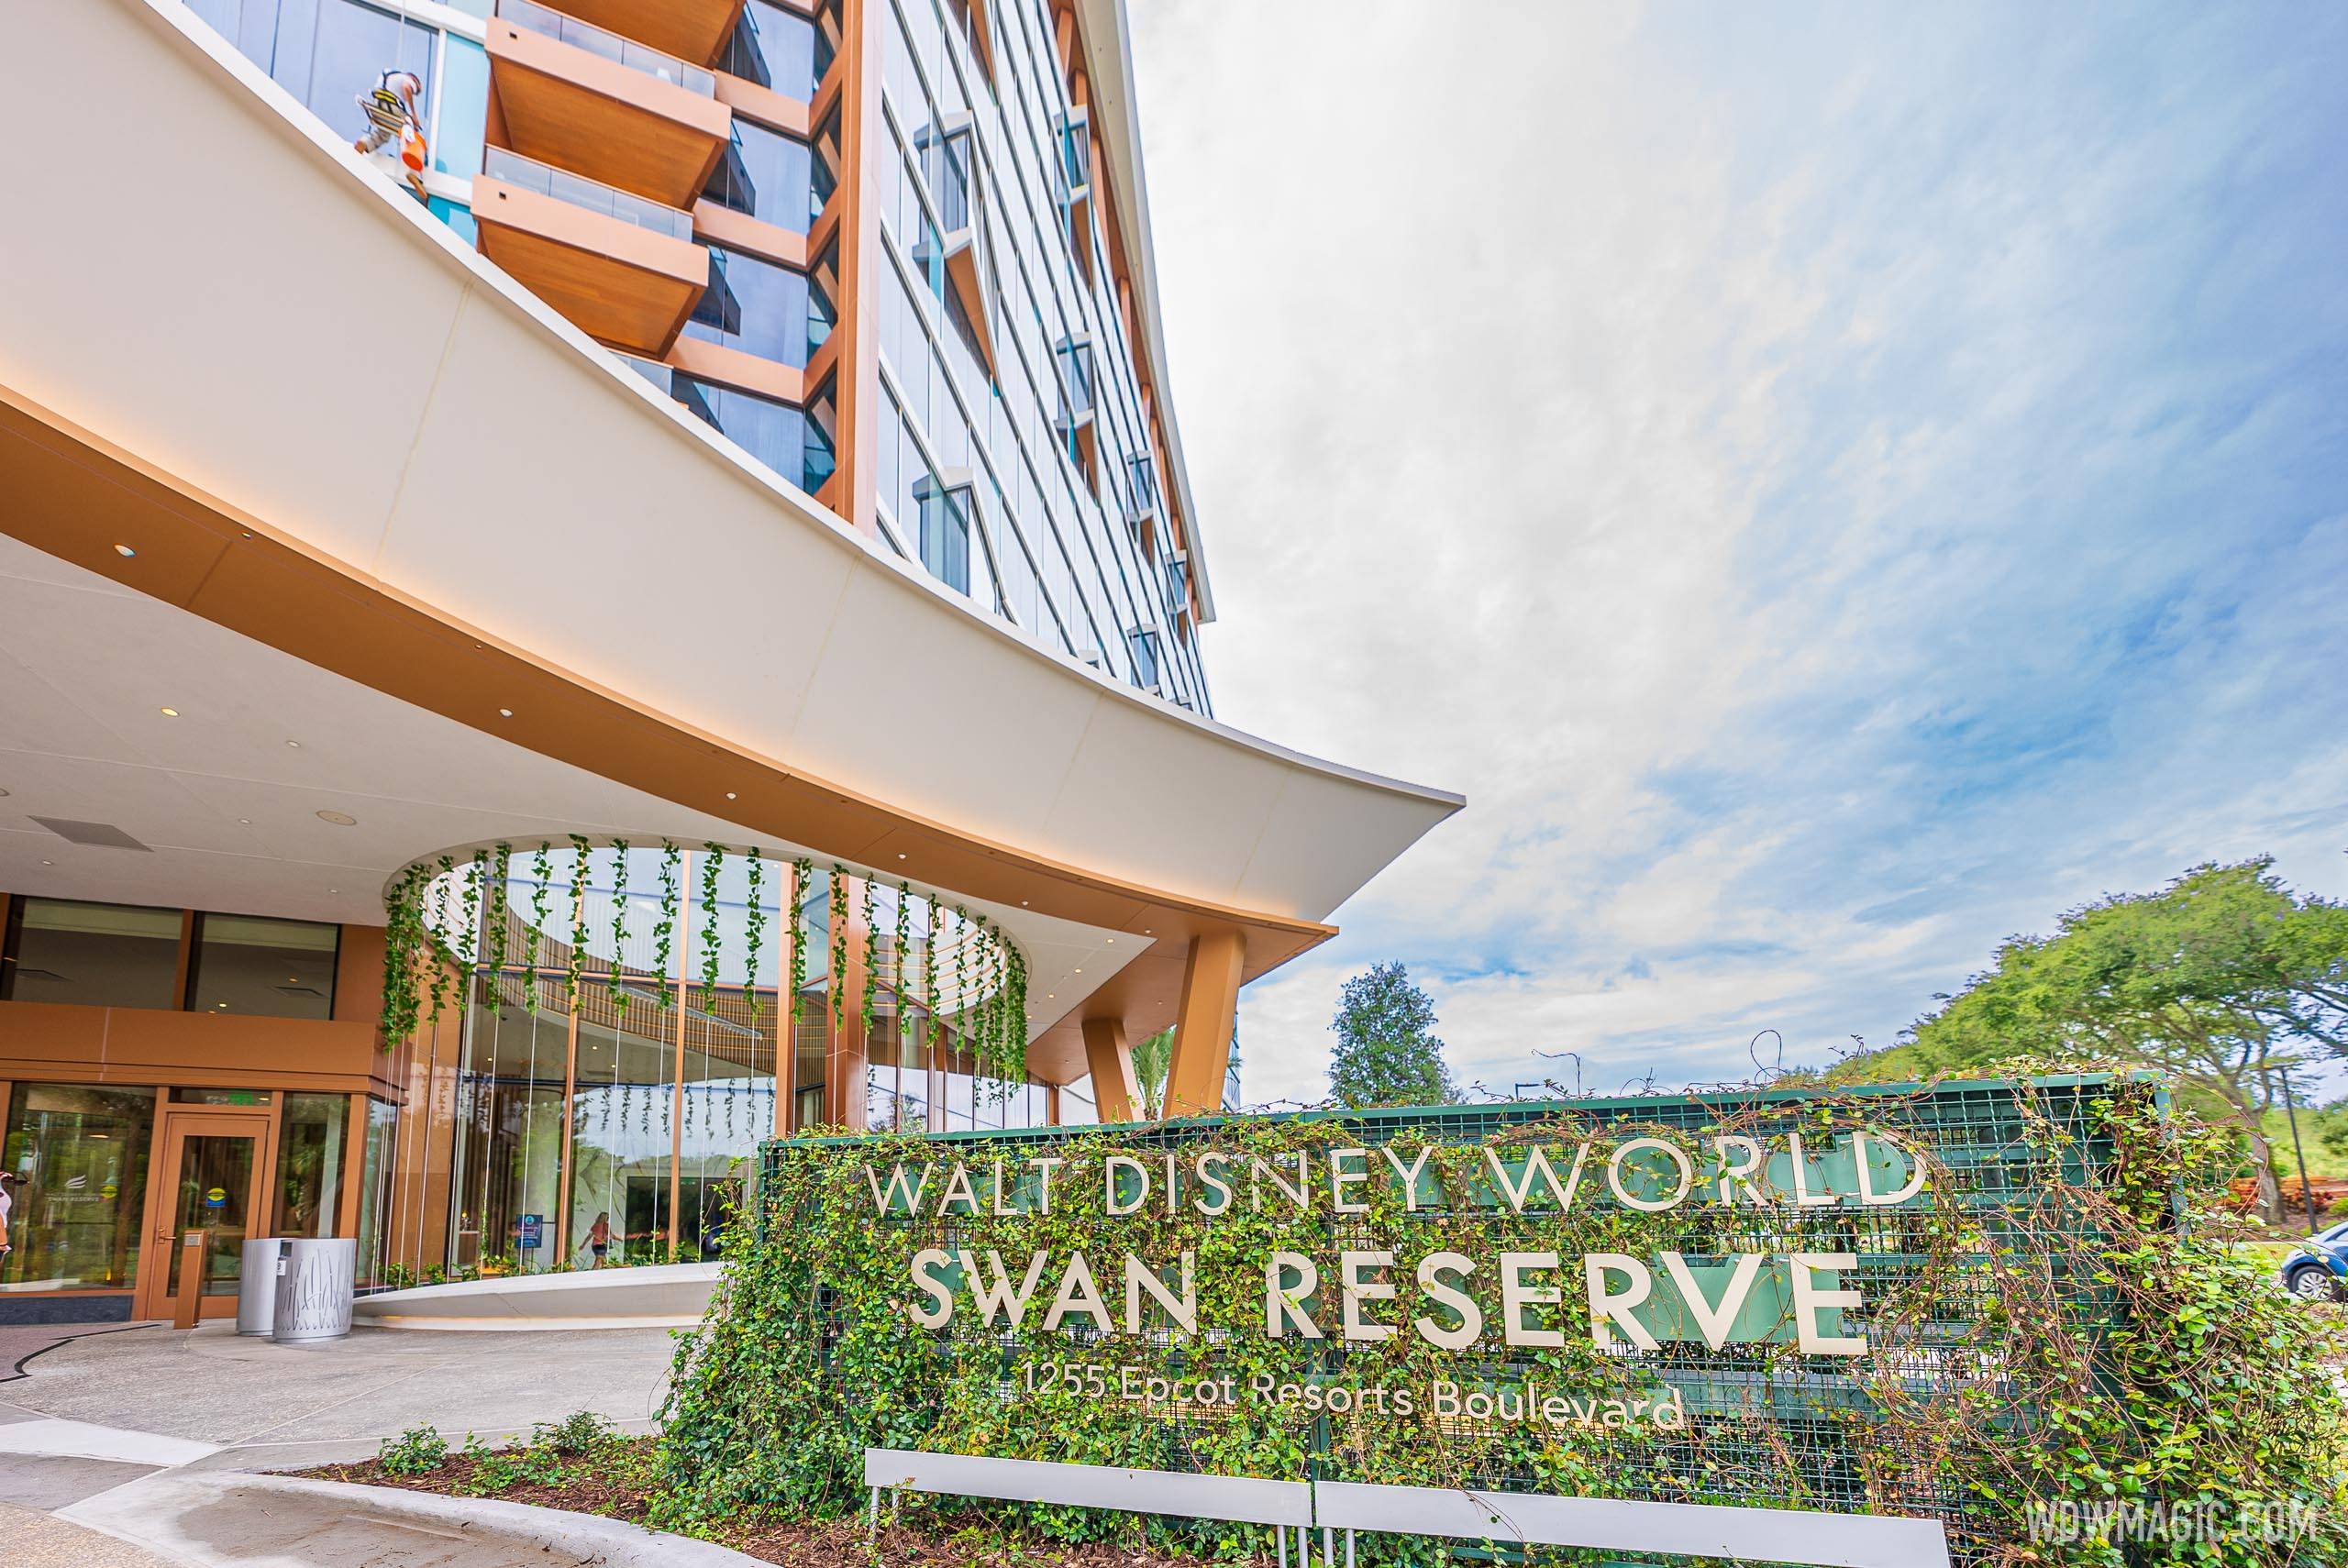 Tour of the Walt Disney World Swan Reserve